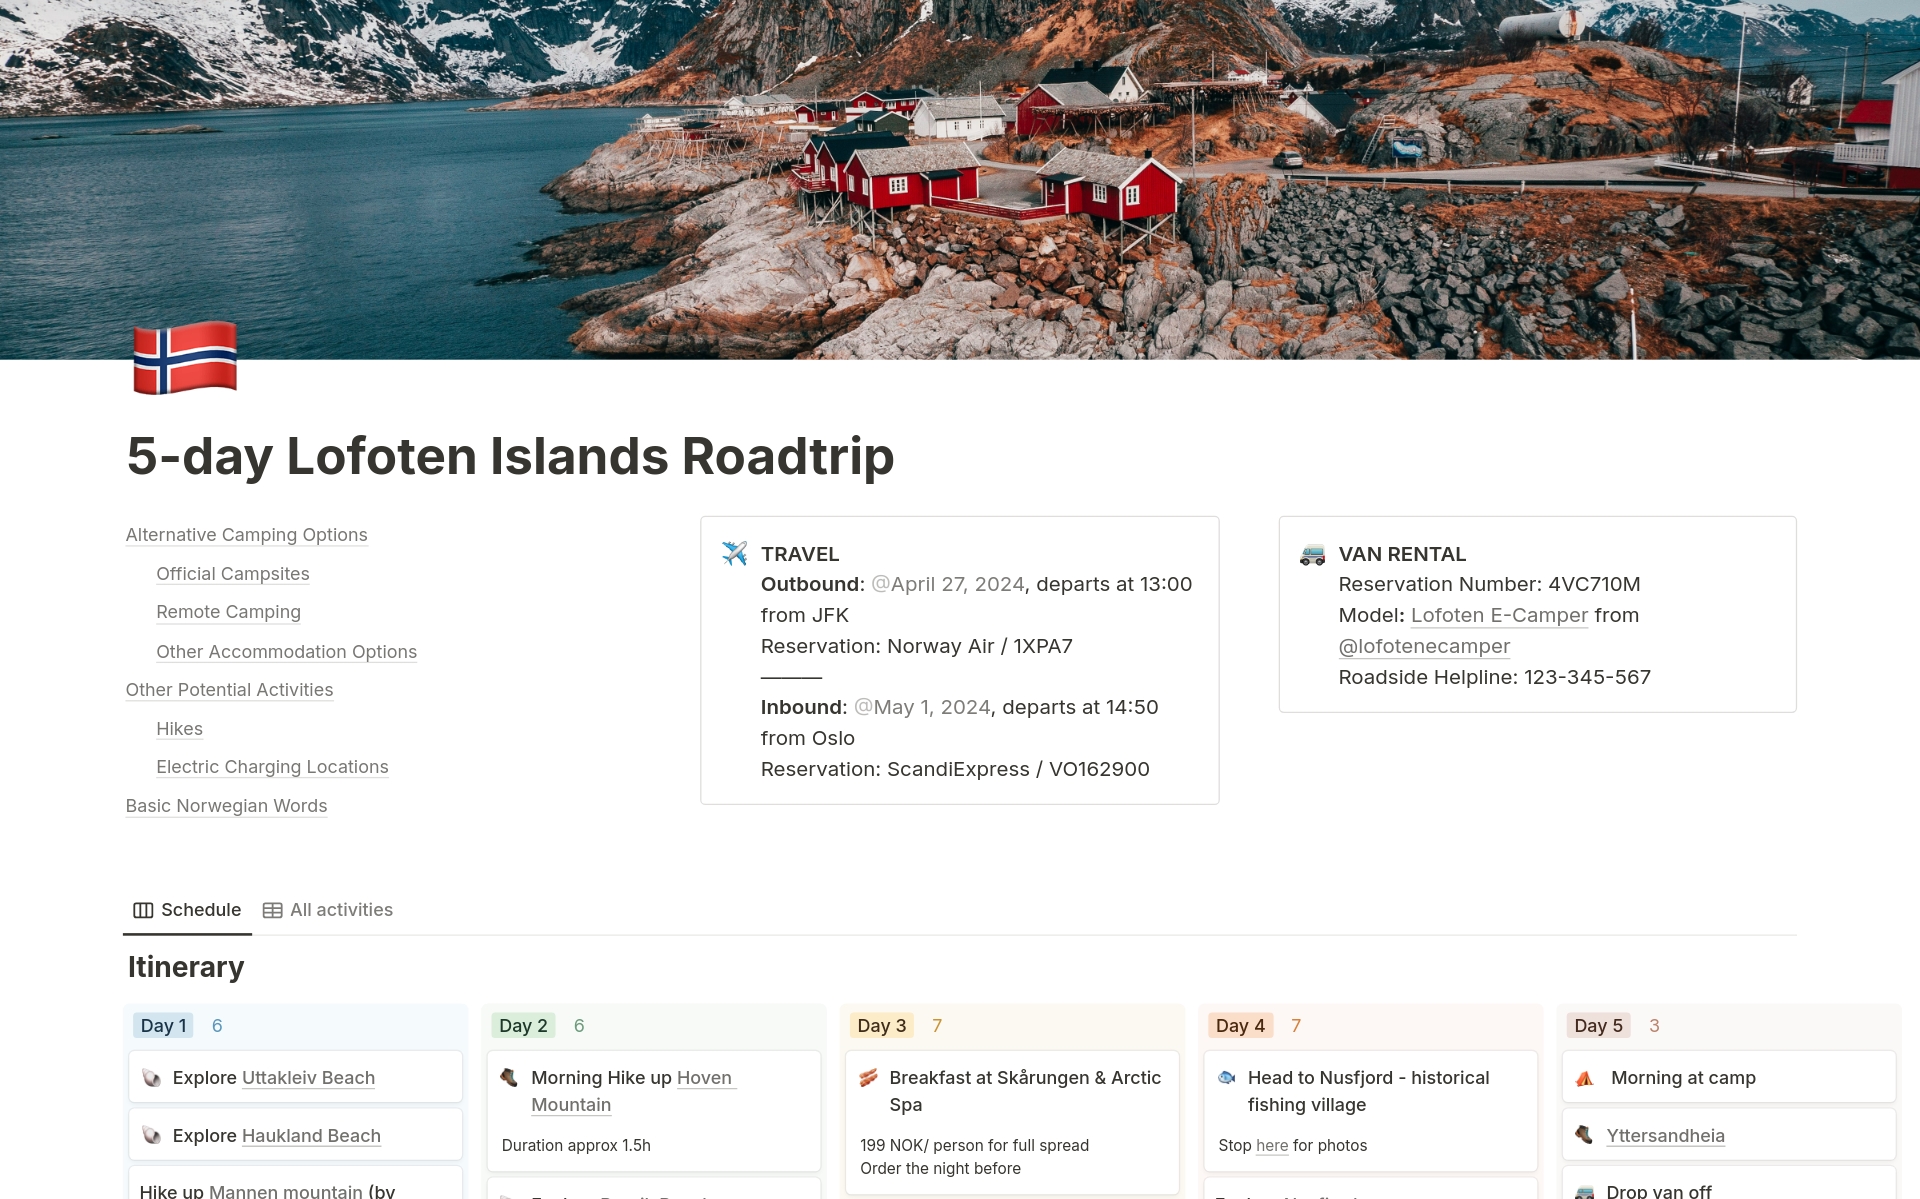 Aperçu du modèle de 5-day Lofoten Islands Roadtrip